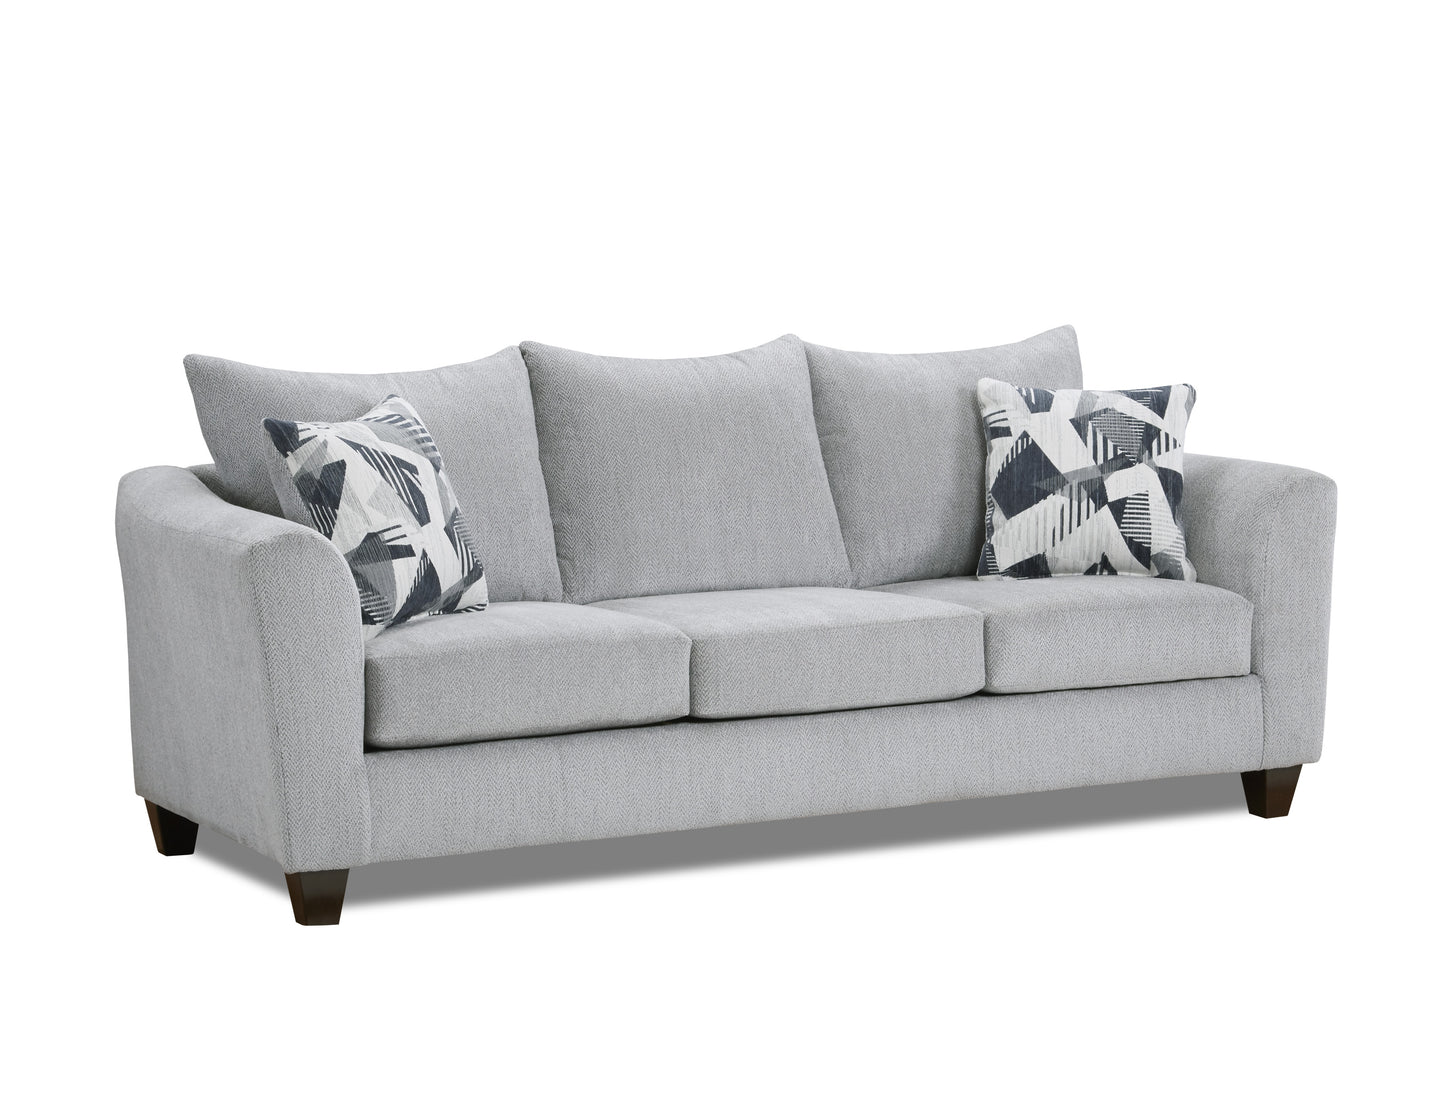 Duleek Upholstered Living Room Collection, Herringbone Silver